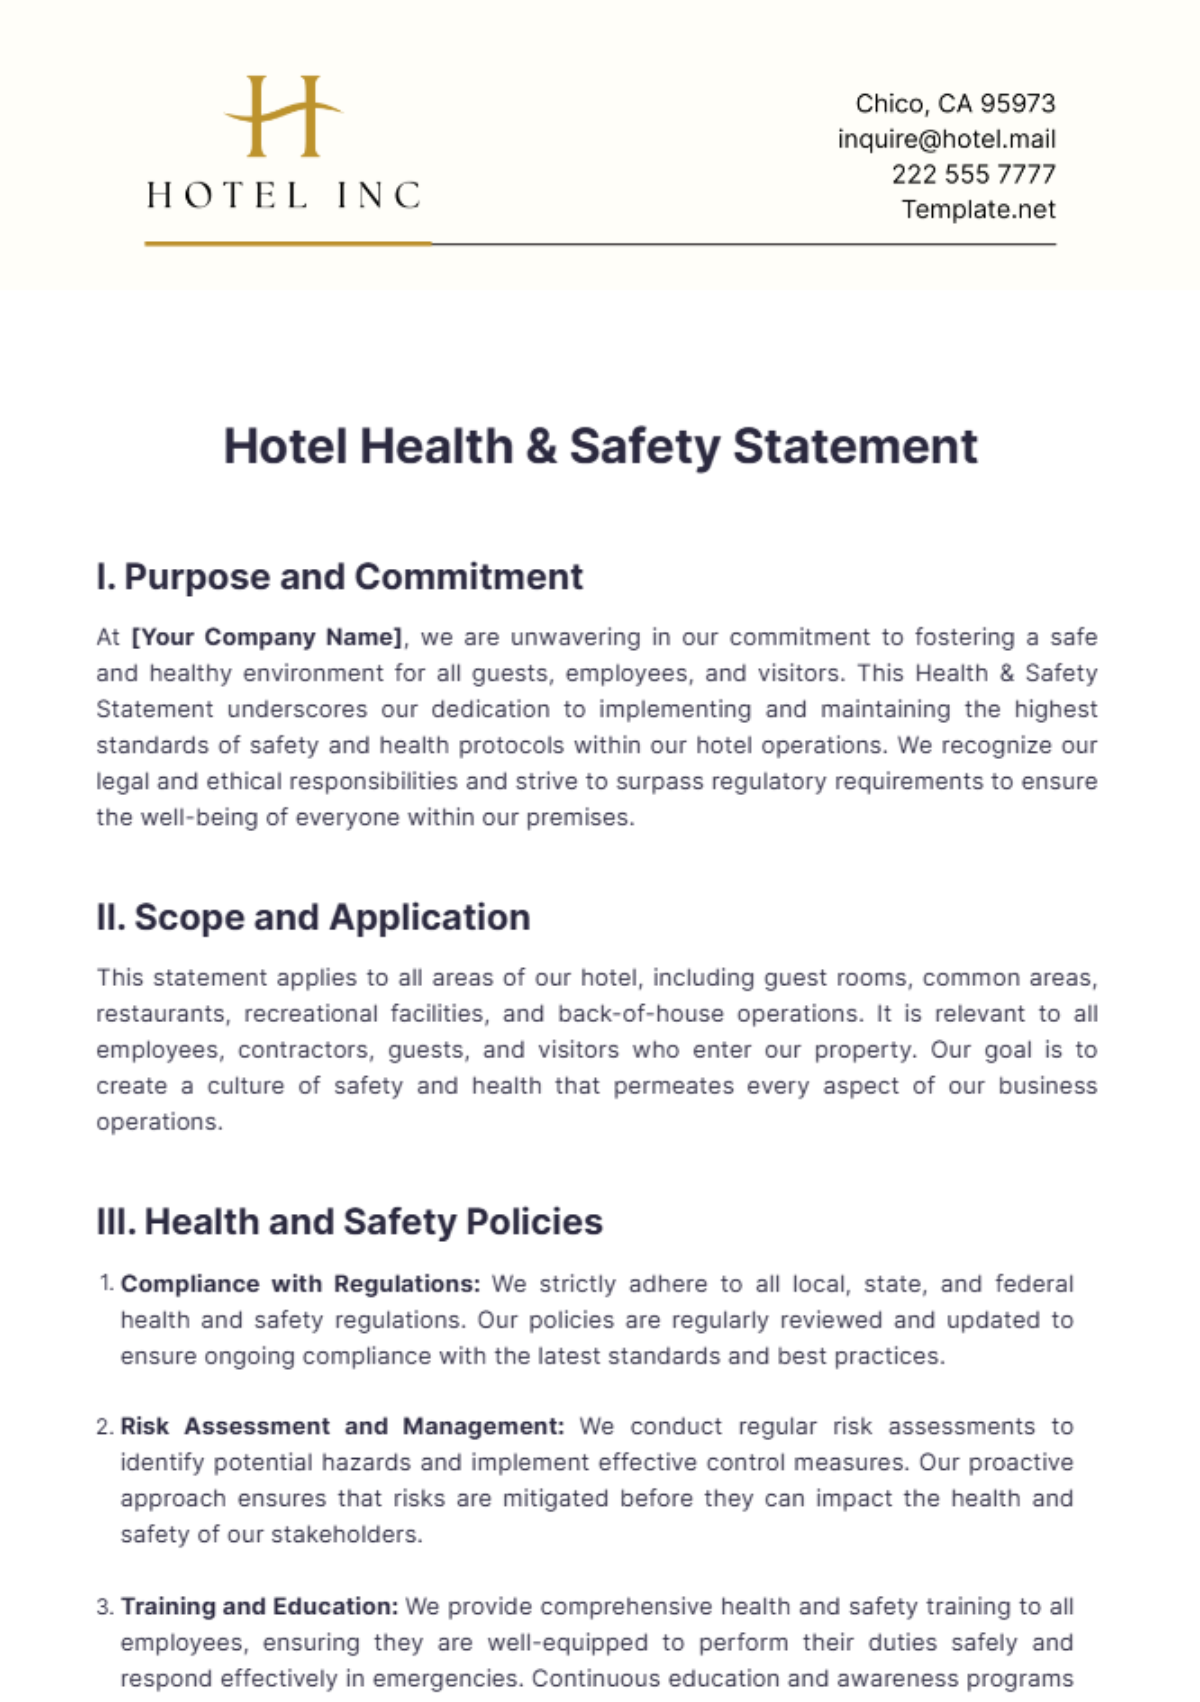 Free Hotel Health & Safety Statement Template